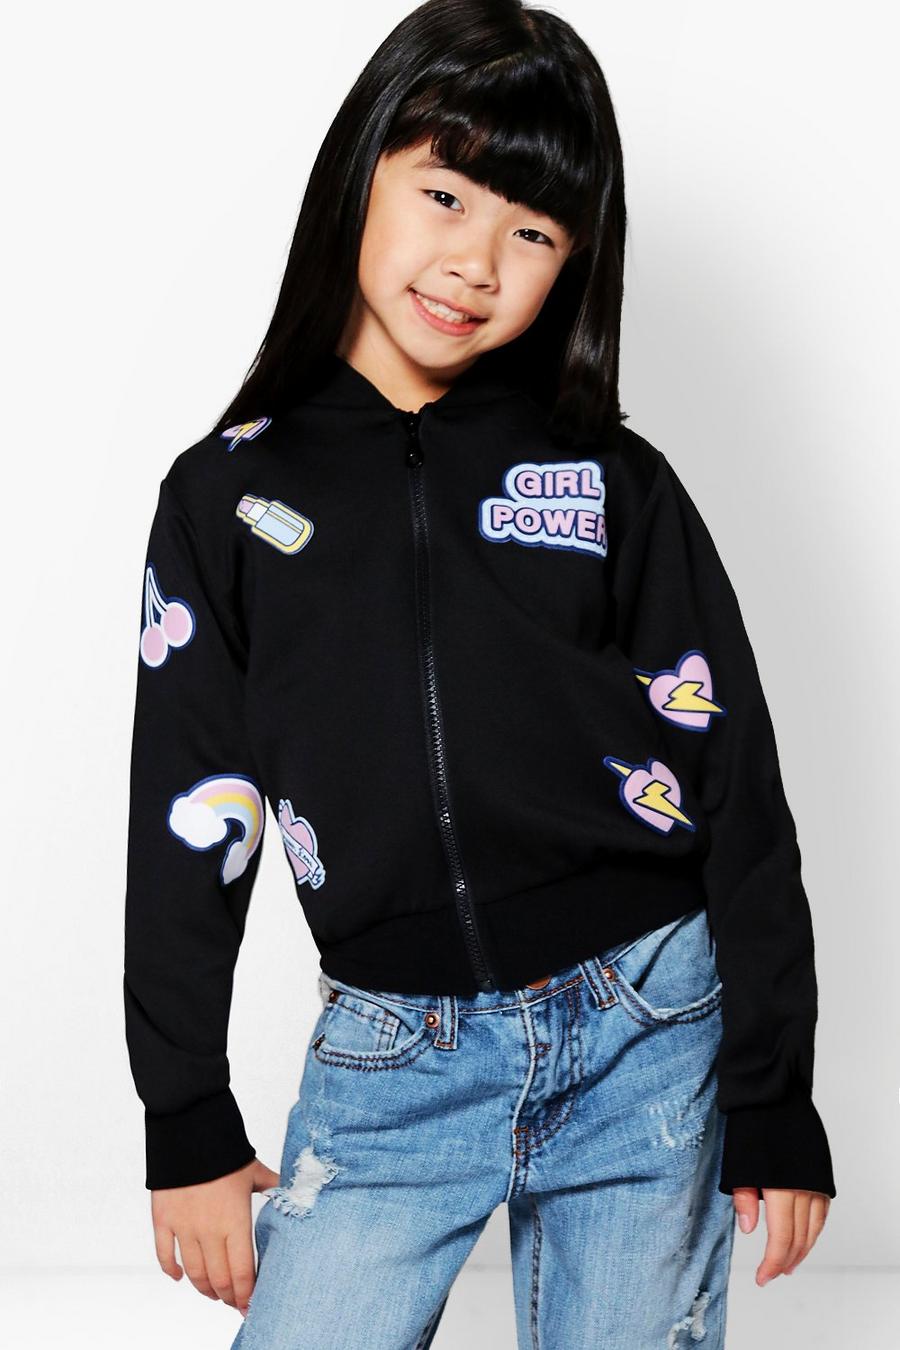 Girls Badge Girl Power Bomber Jacket image number 1